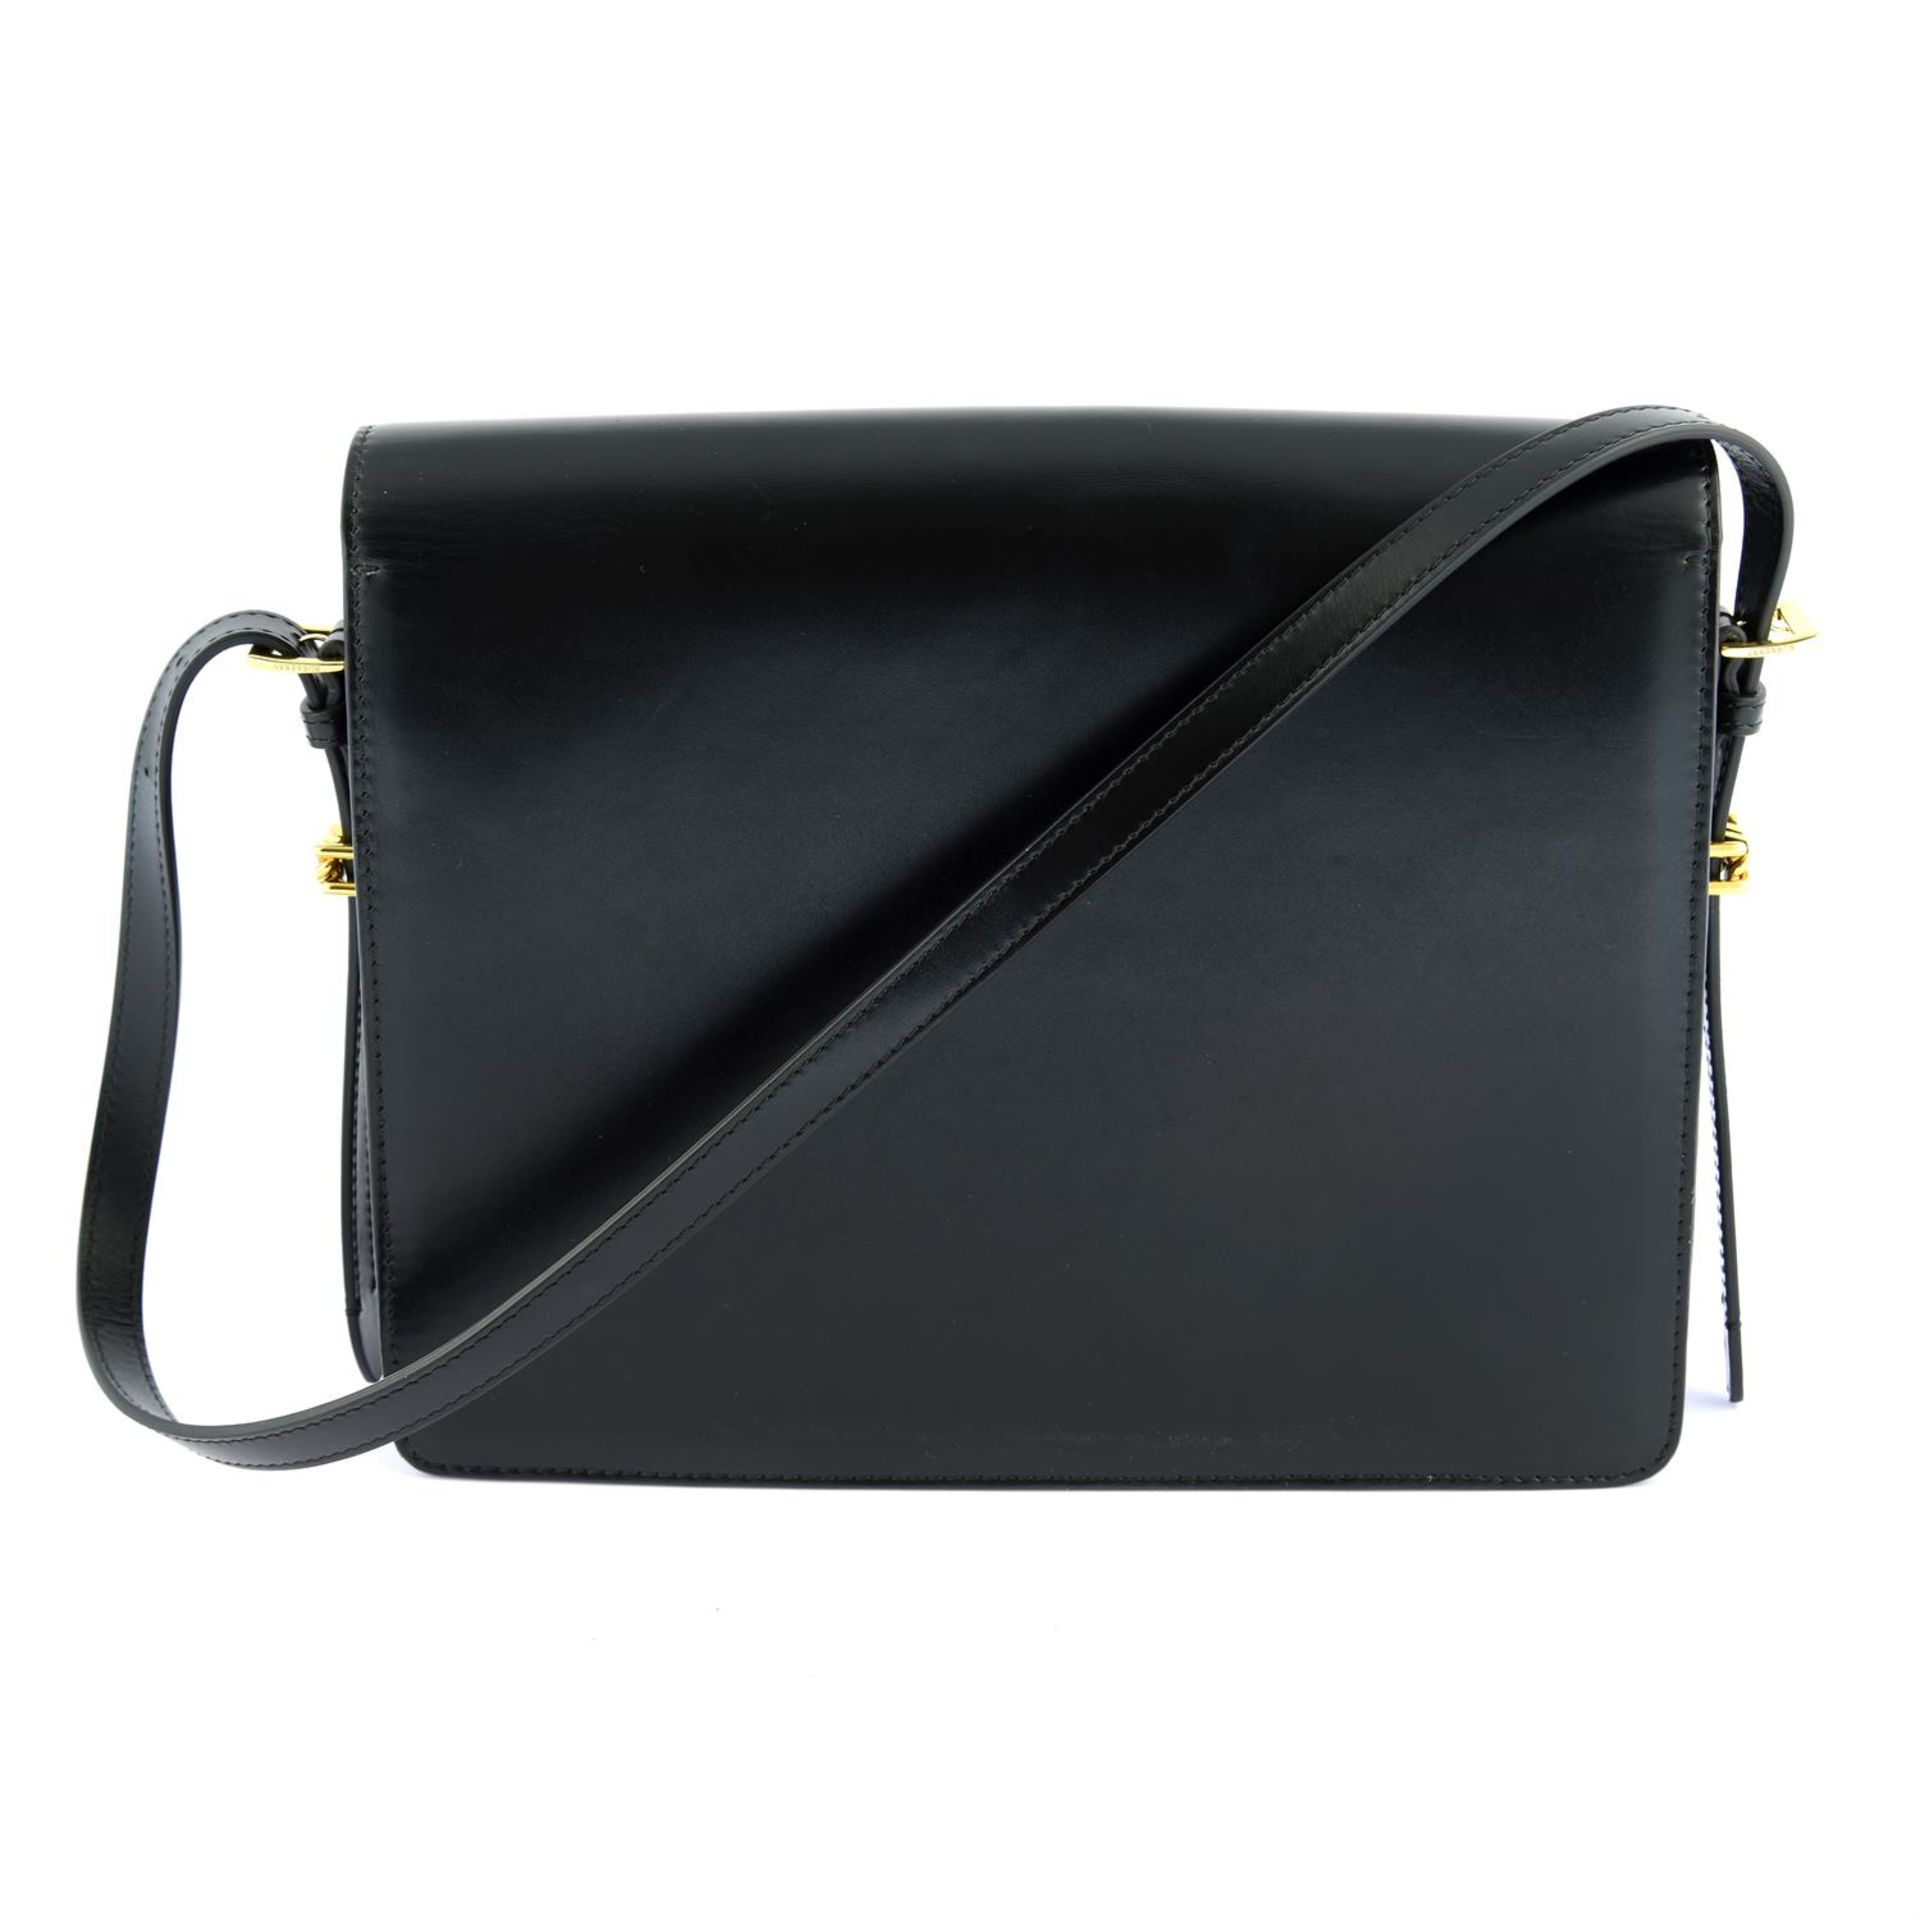 BURBERRY- a black leather handbag. - Bild 2 aus 5